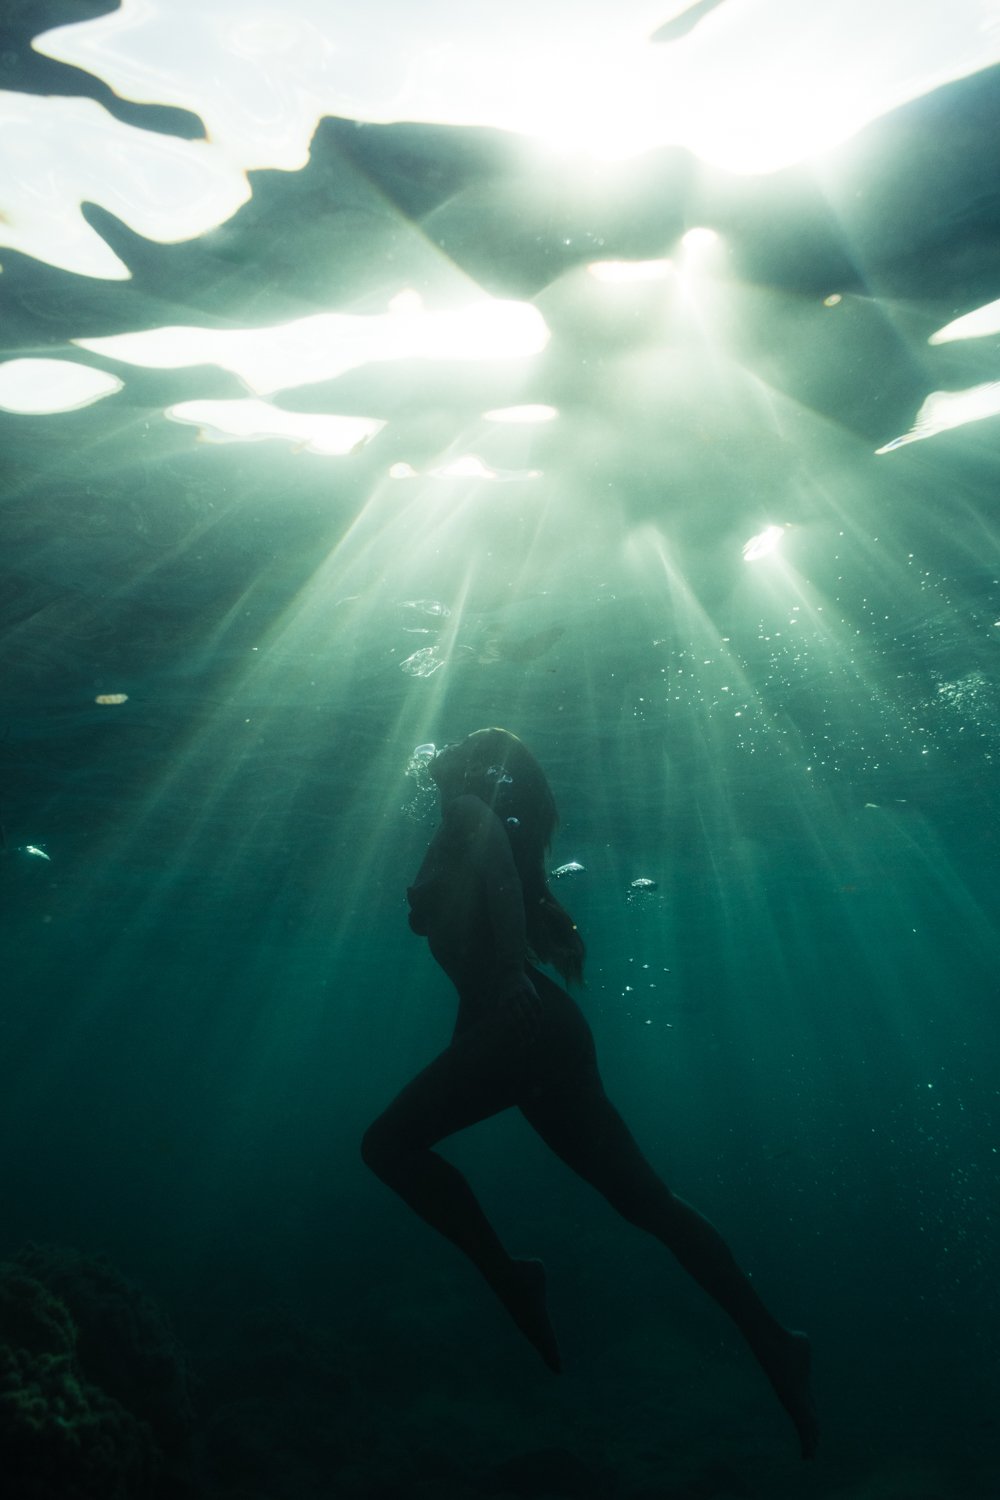 siren sirens corse corsica underwater photography photographe sous leau mermaid femme woman women nude nue fine art photography Krista Espino ajaccio sea Mediterranean france travel-5.jpg